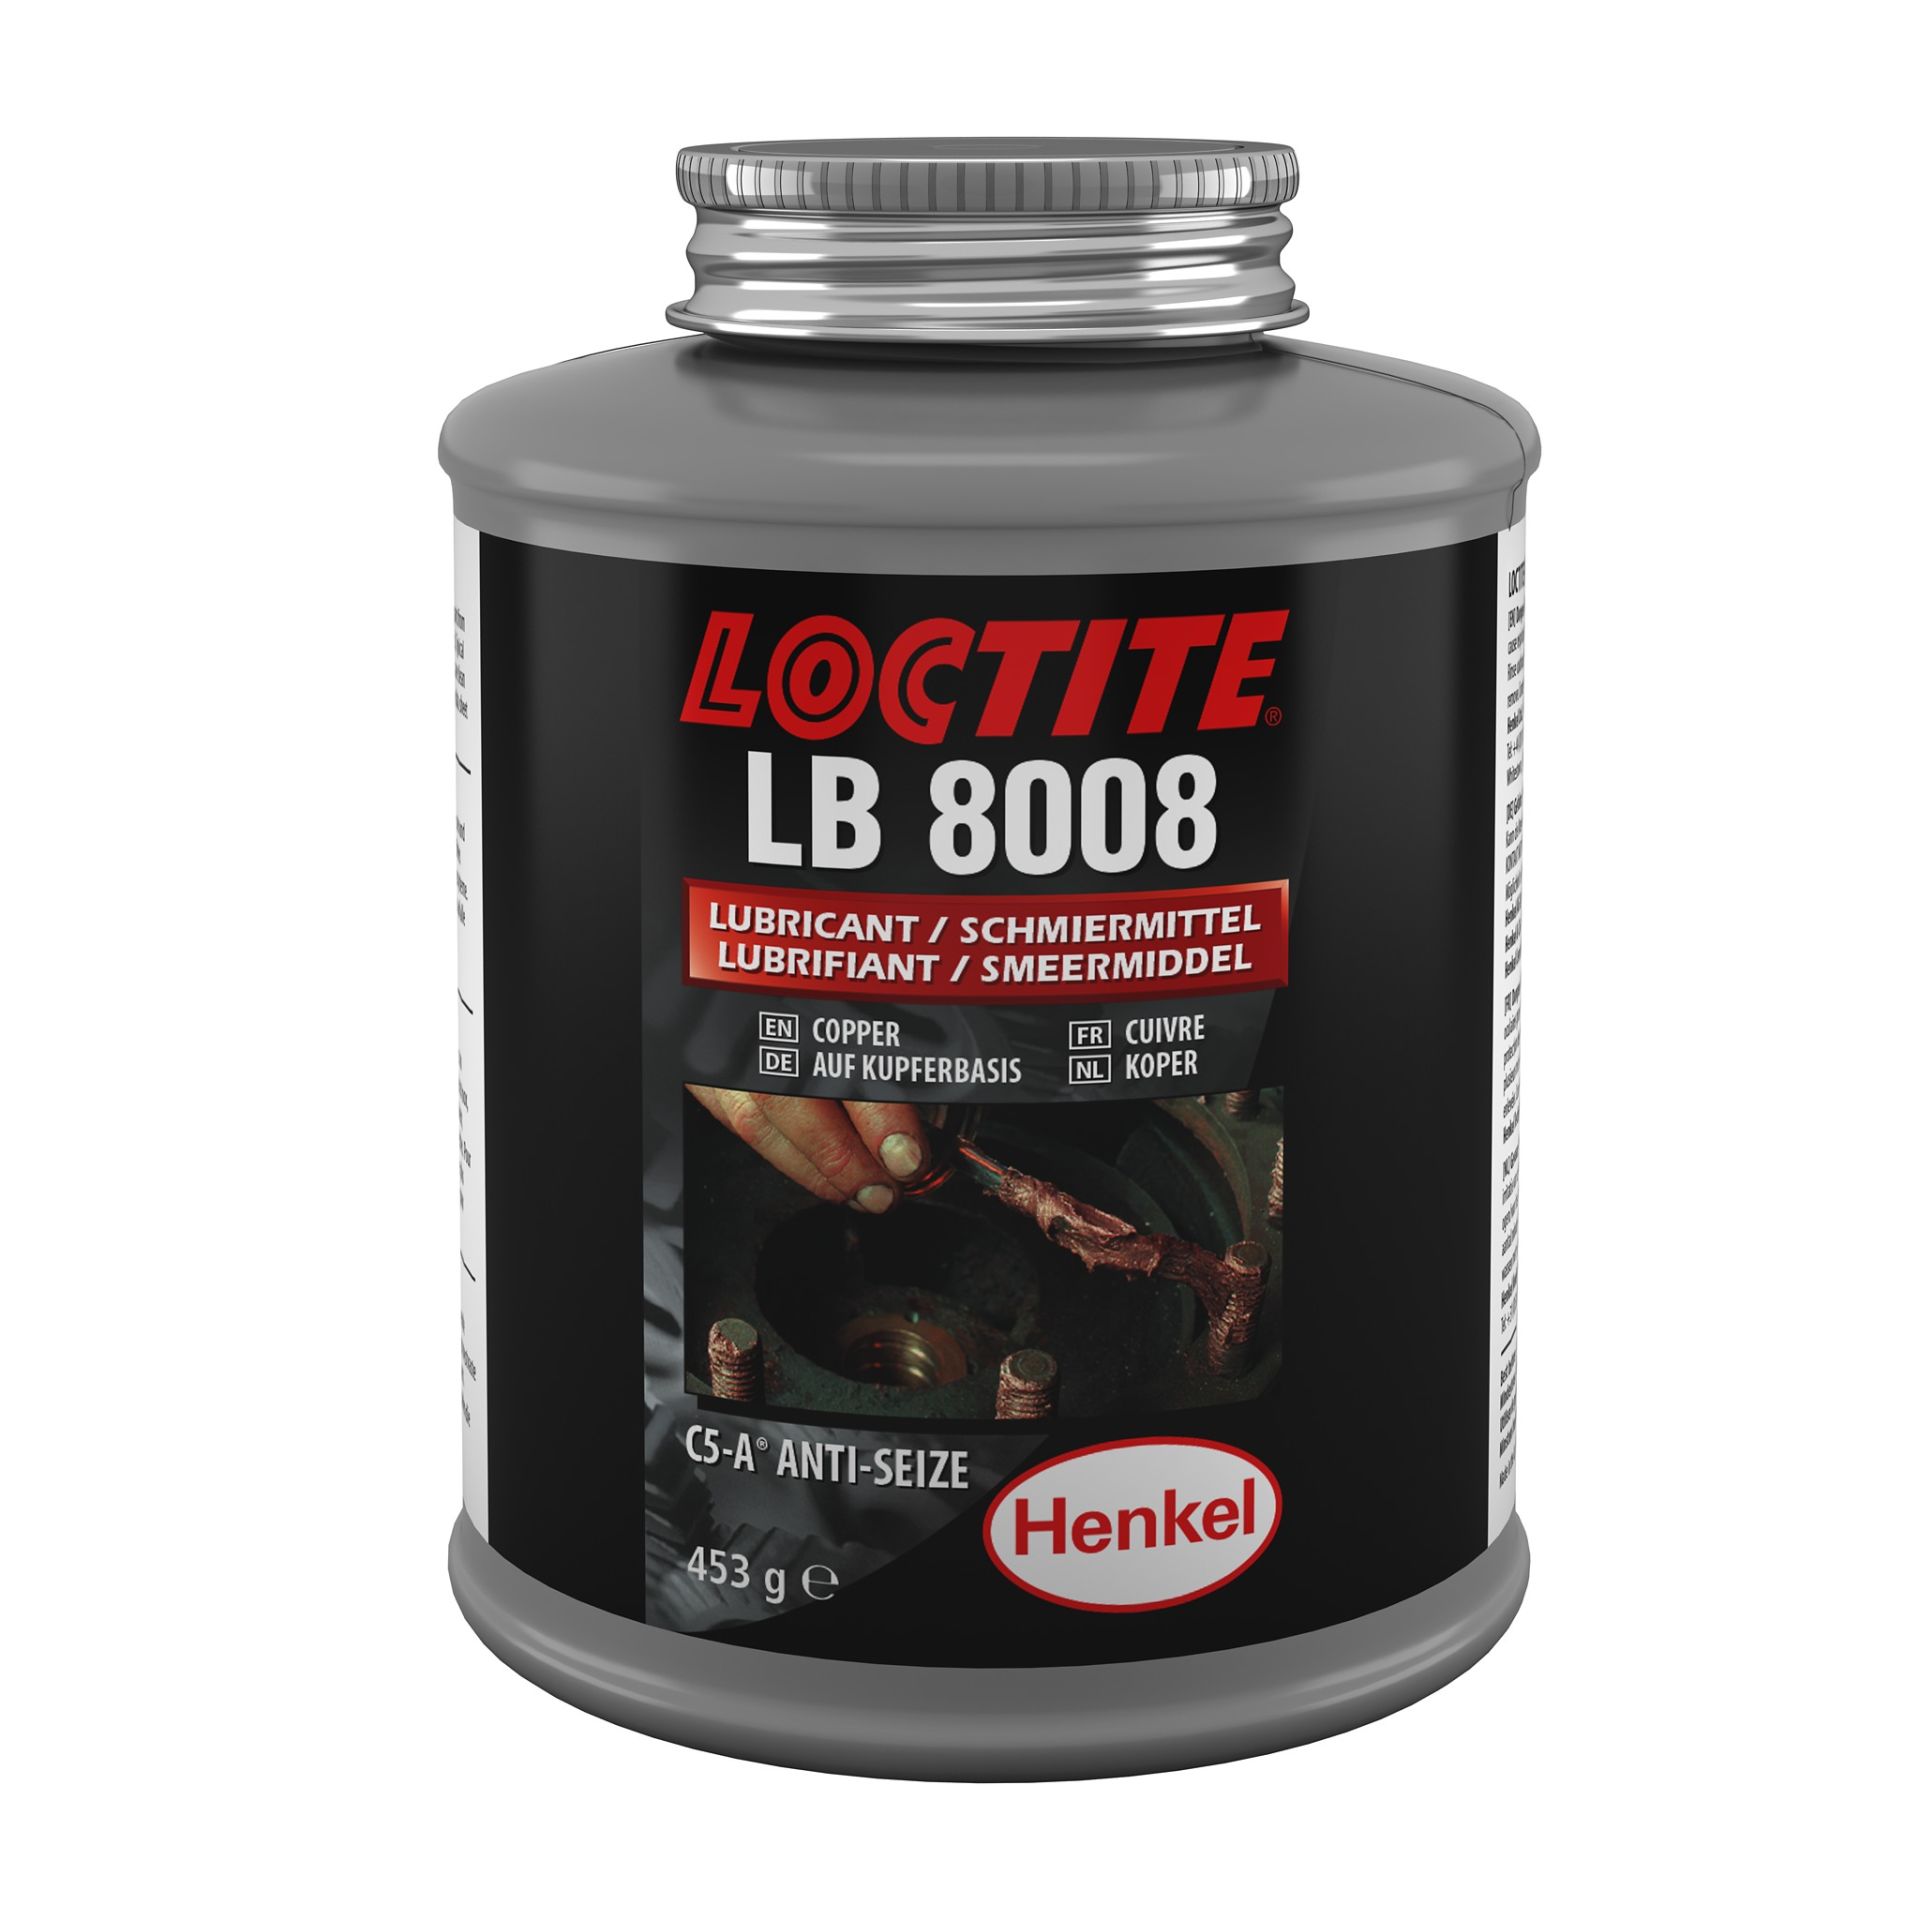 Loctite LB 8008 C5-A Bakır Montaj Pastası 453 GR